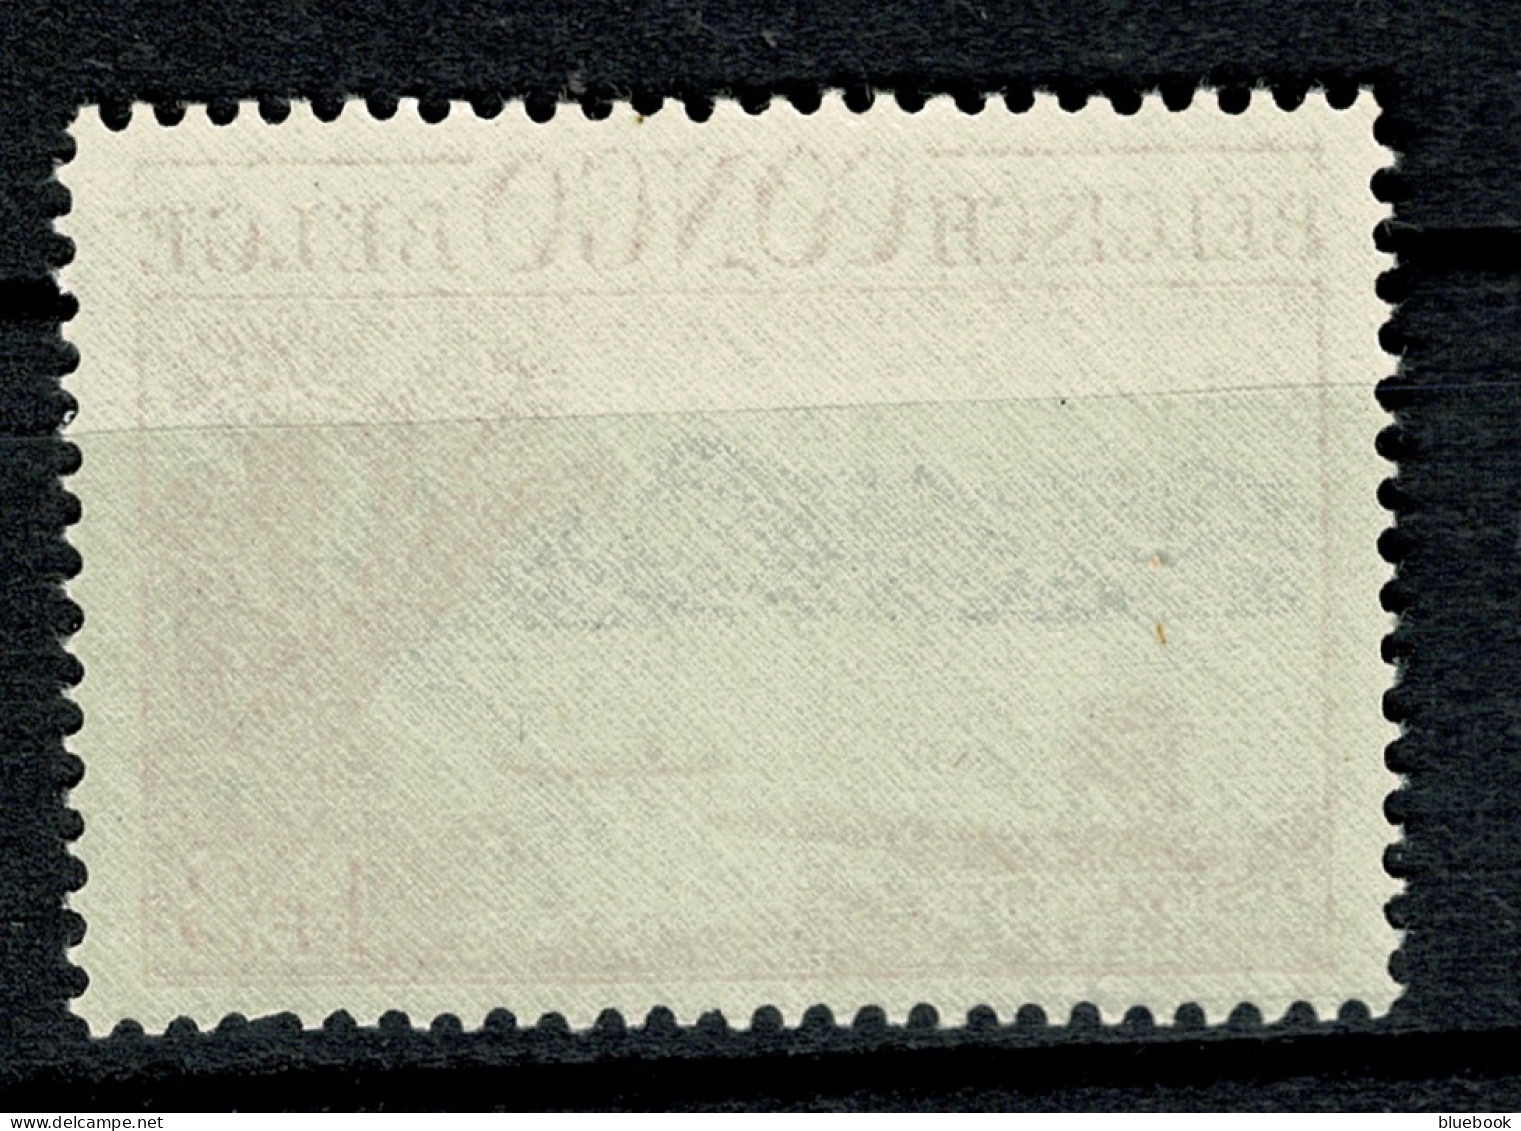 Ref 1609 - 1953 Belgian Congo - Kivu Festival Fr3  MNH  SG 319 - Unused Stamps